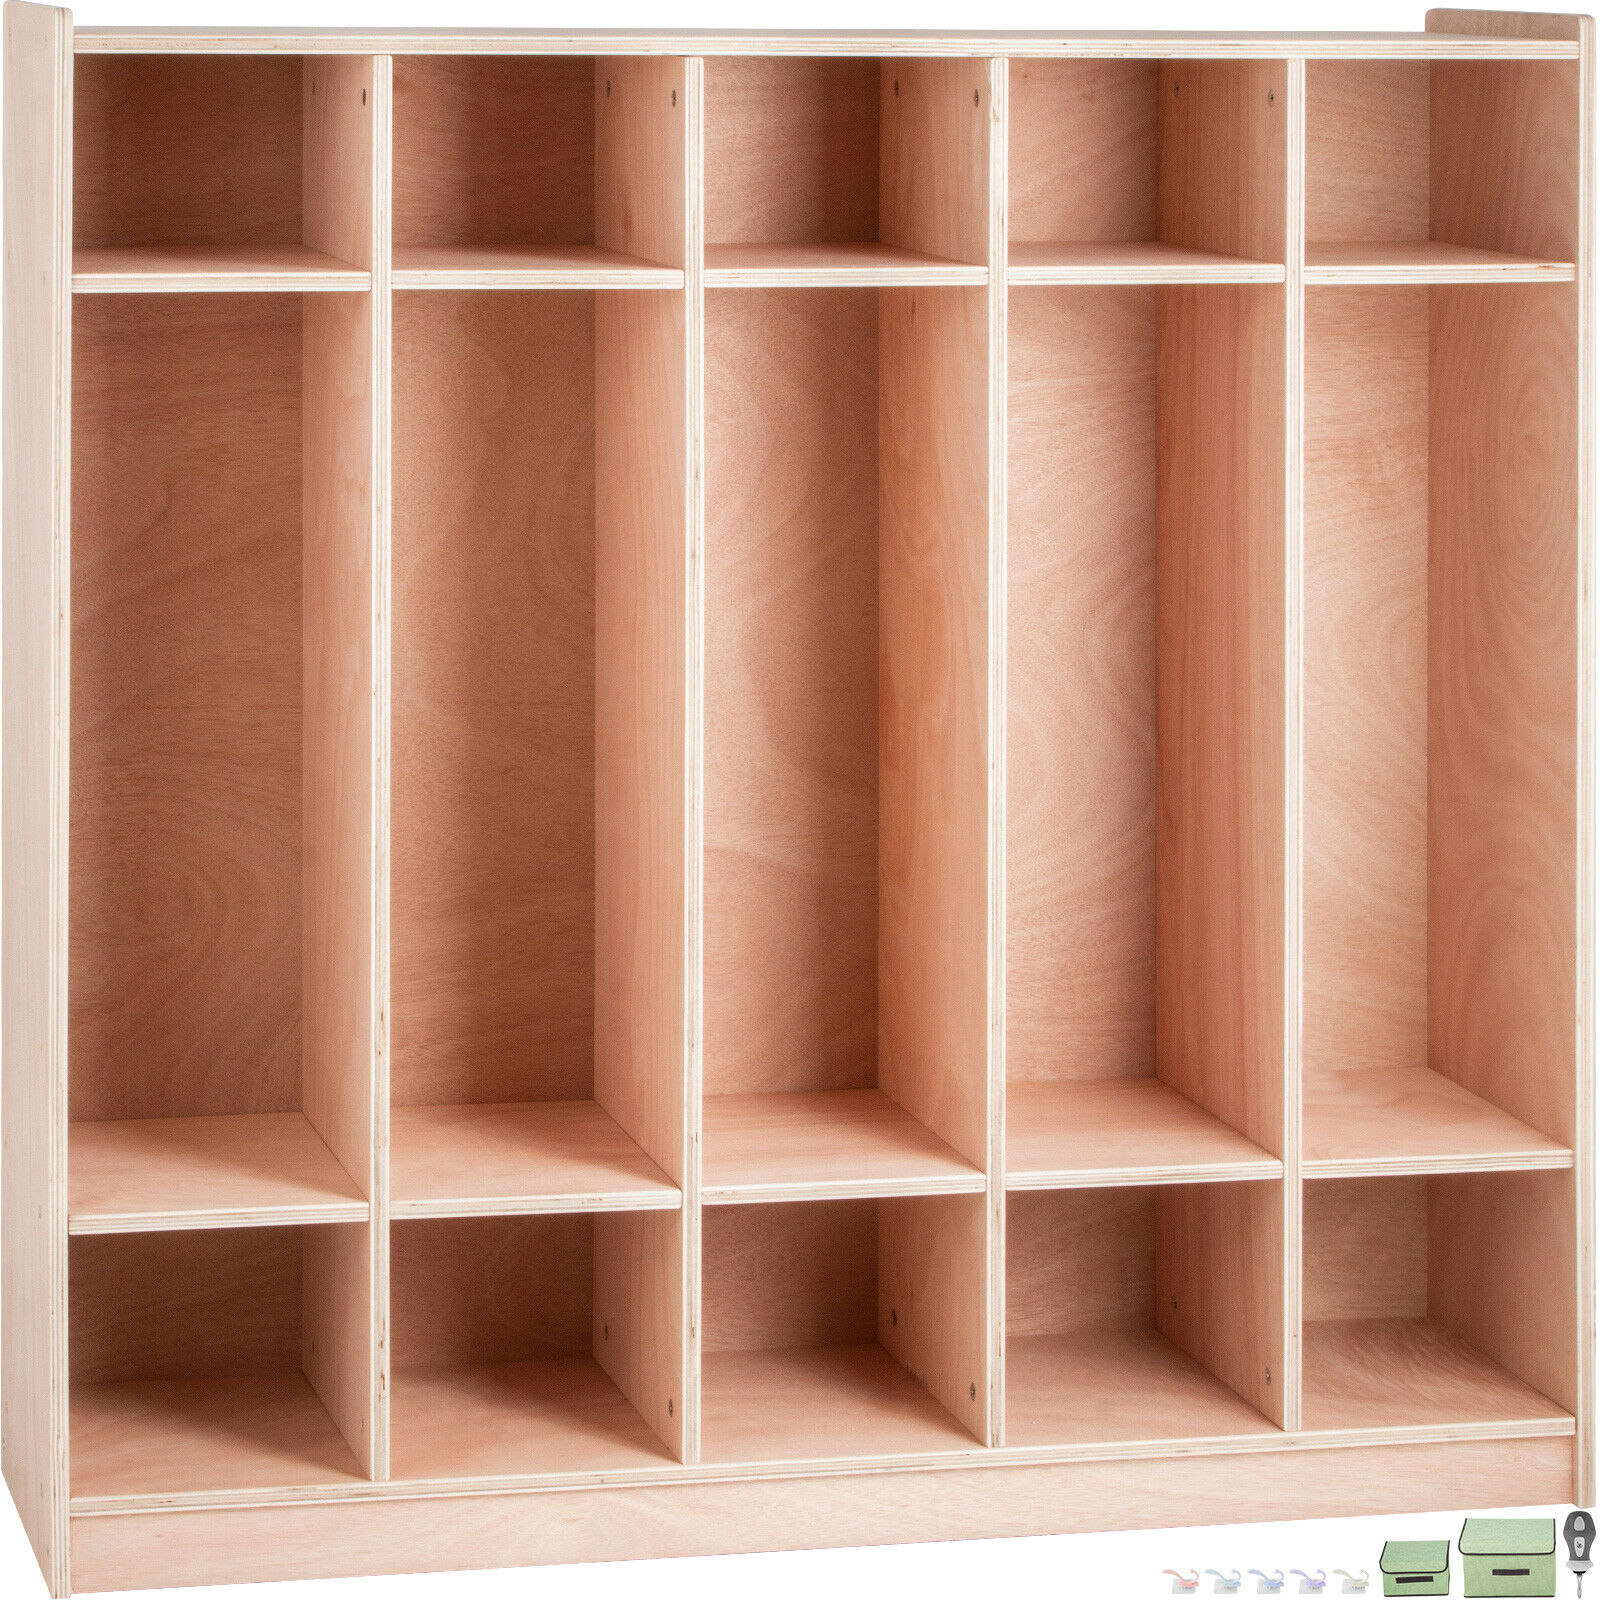 Cubby Storage Units,20 Grids,Wood